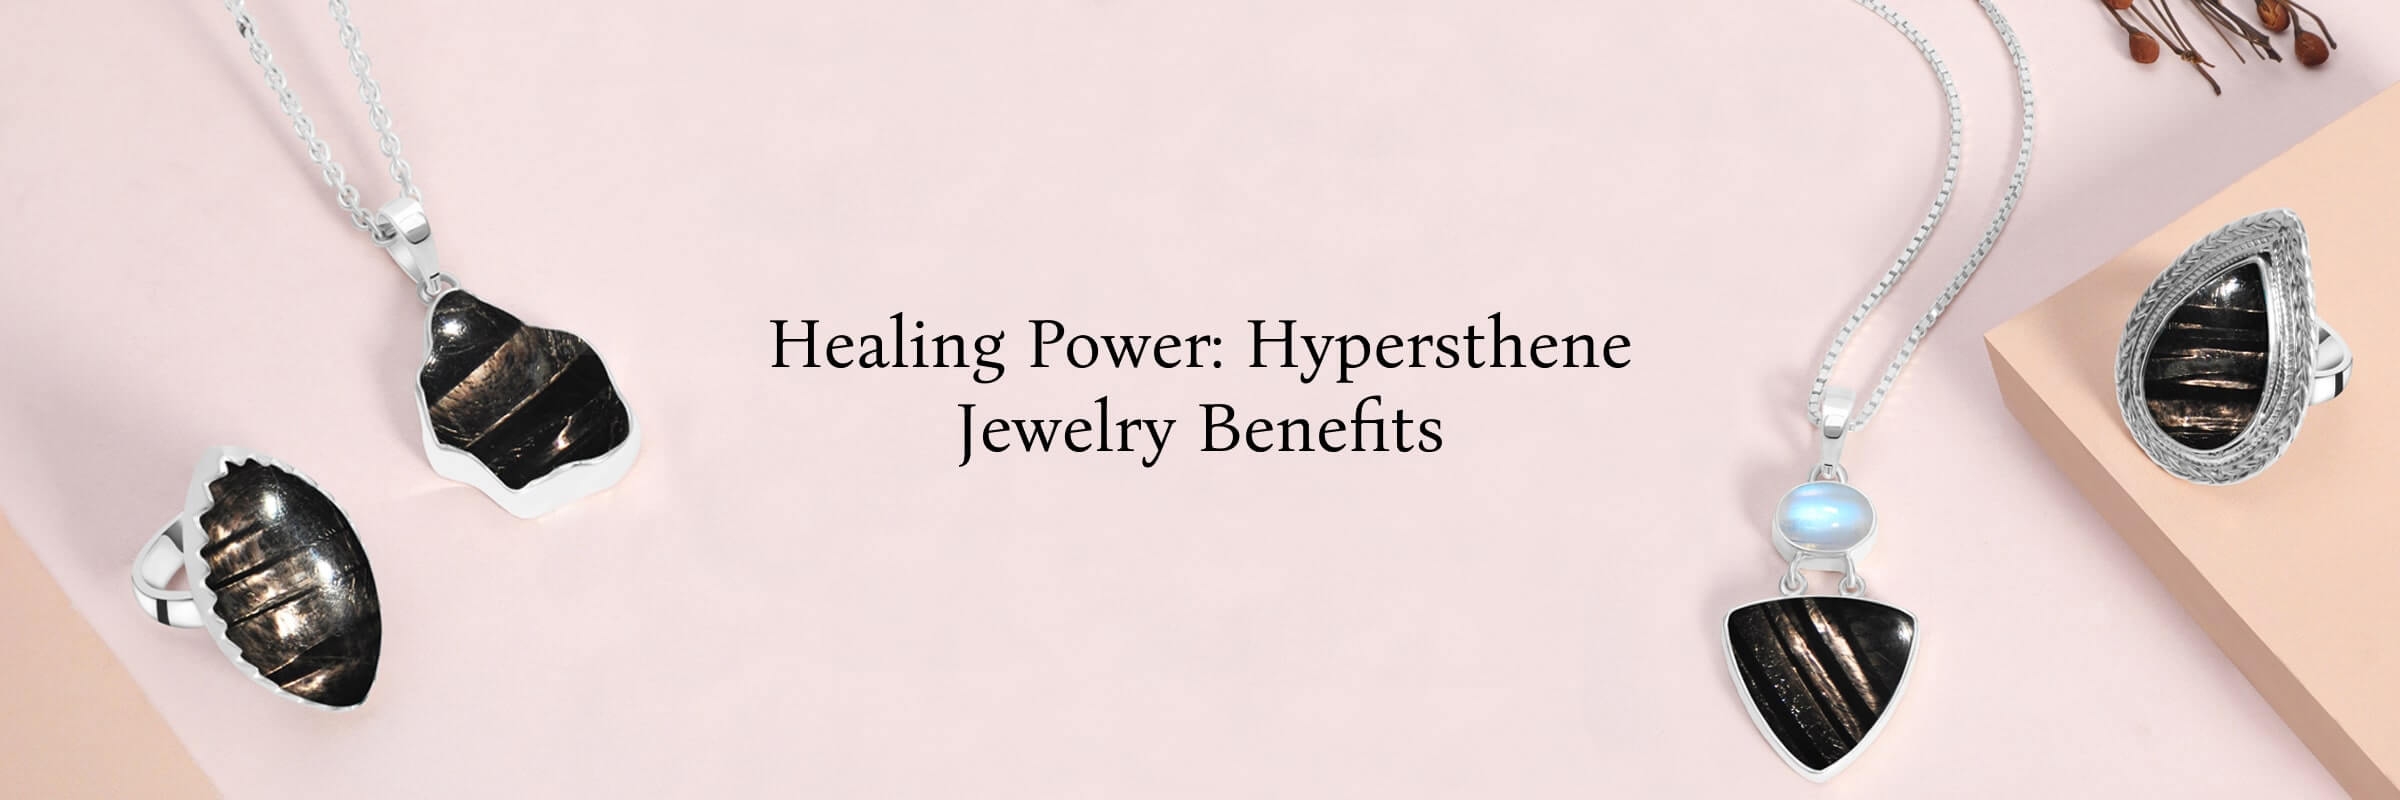 Healing Properties of Hypersthene Jewelry